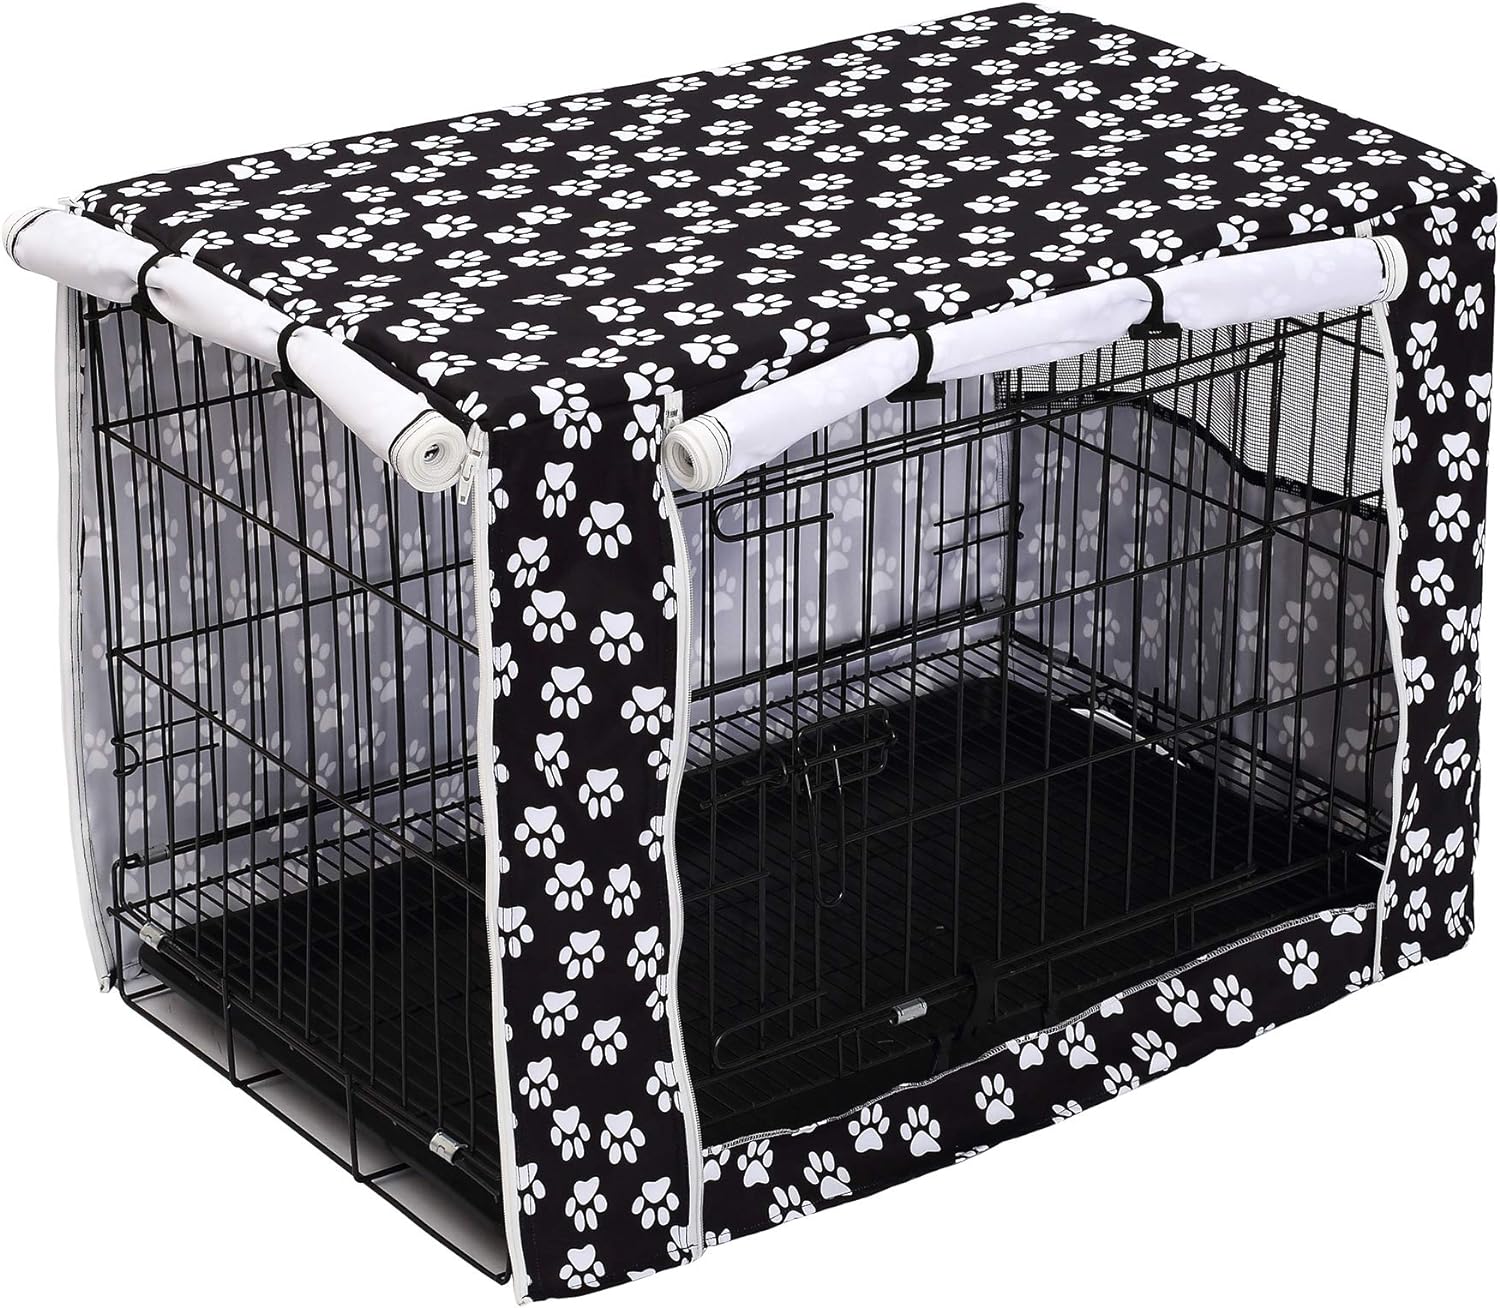 Morezi Dog Crate Cover for Wire Crates